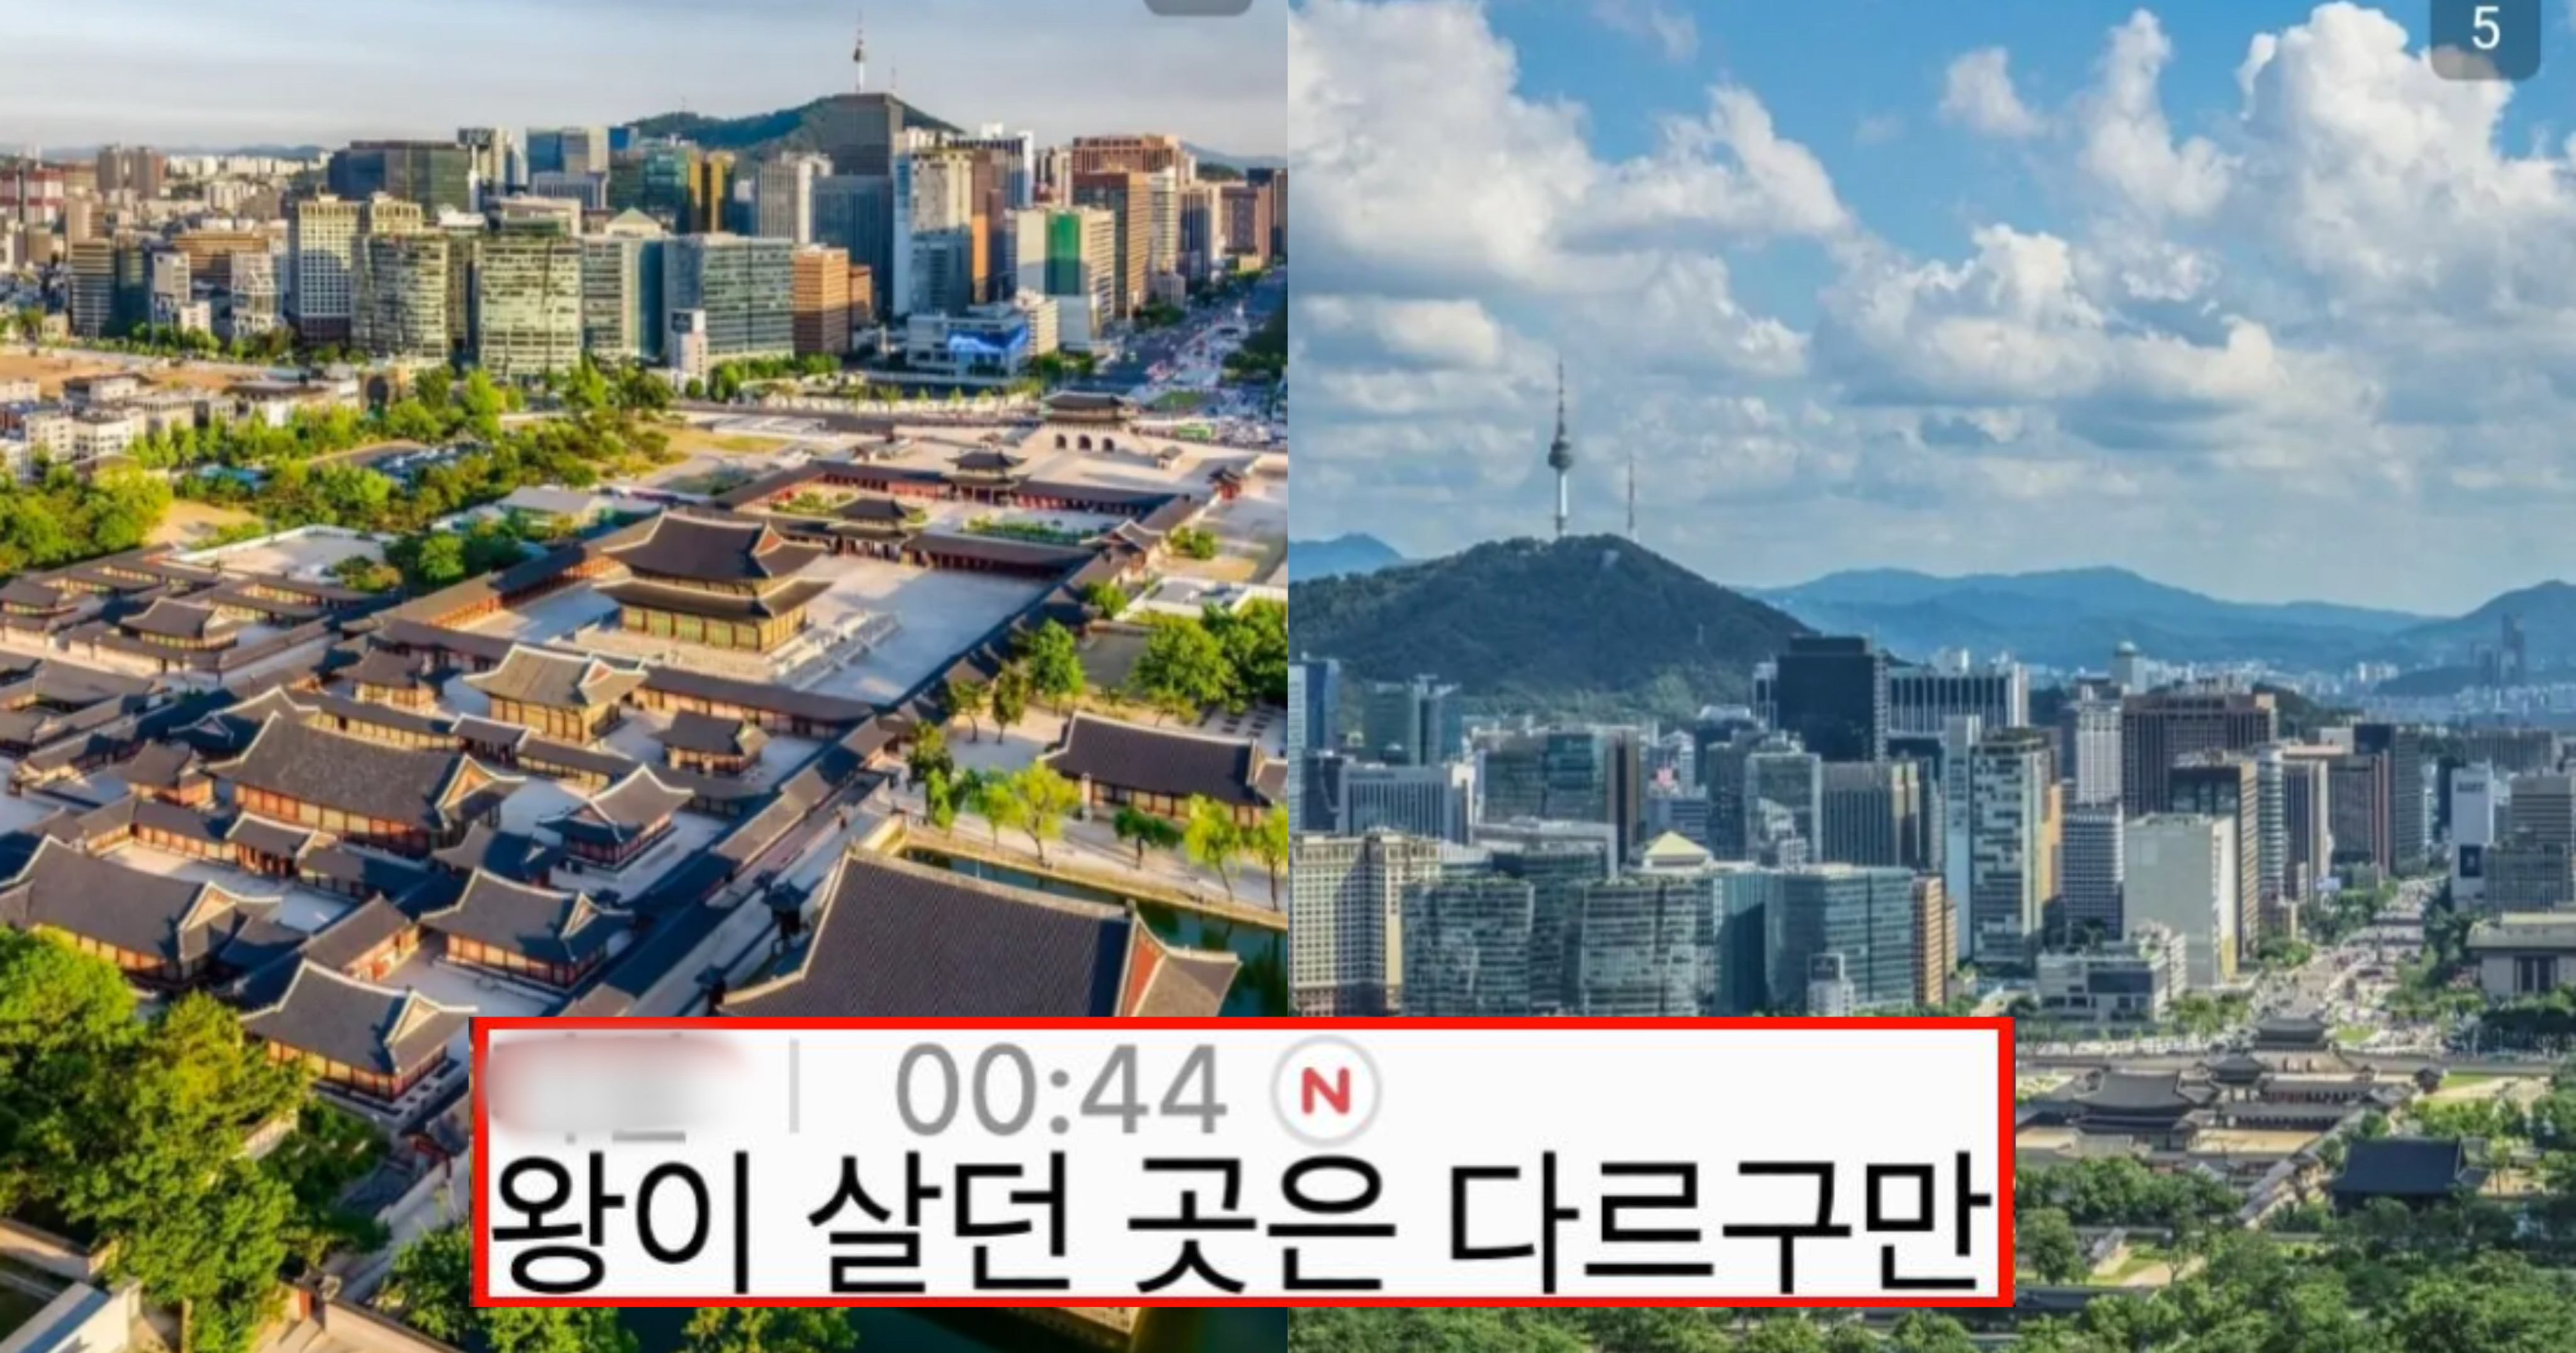 2b8f3084 f614 47eb a6e6 eb03175a5154.jpeg - "침수가 뭐죠?" 이번 폭우로 다시 확인된 서울의 진짜 근본 동네